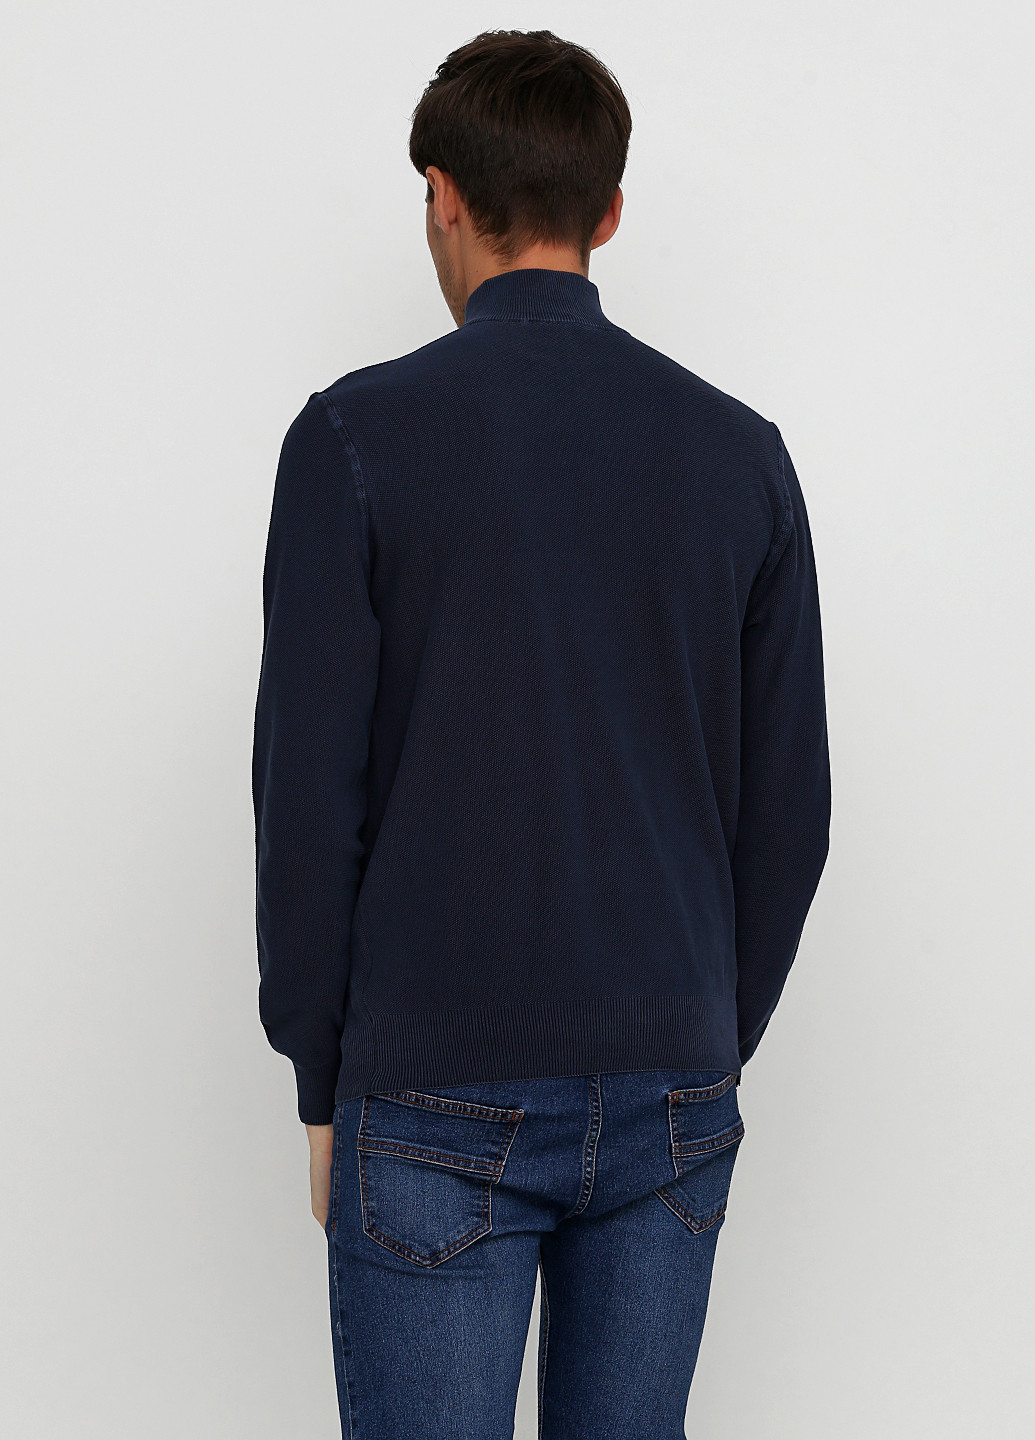 Темно-синий демисезонный свитер джемпер Cashmere Company